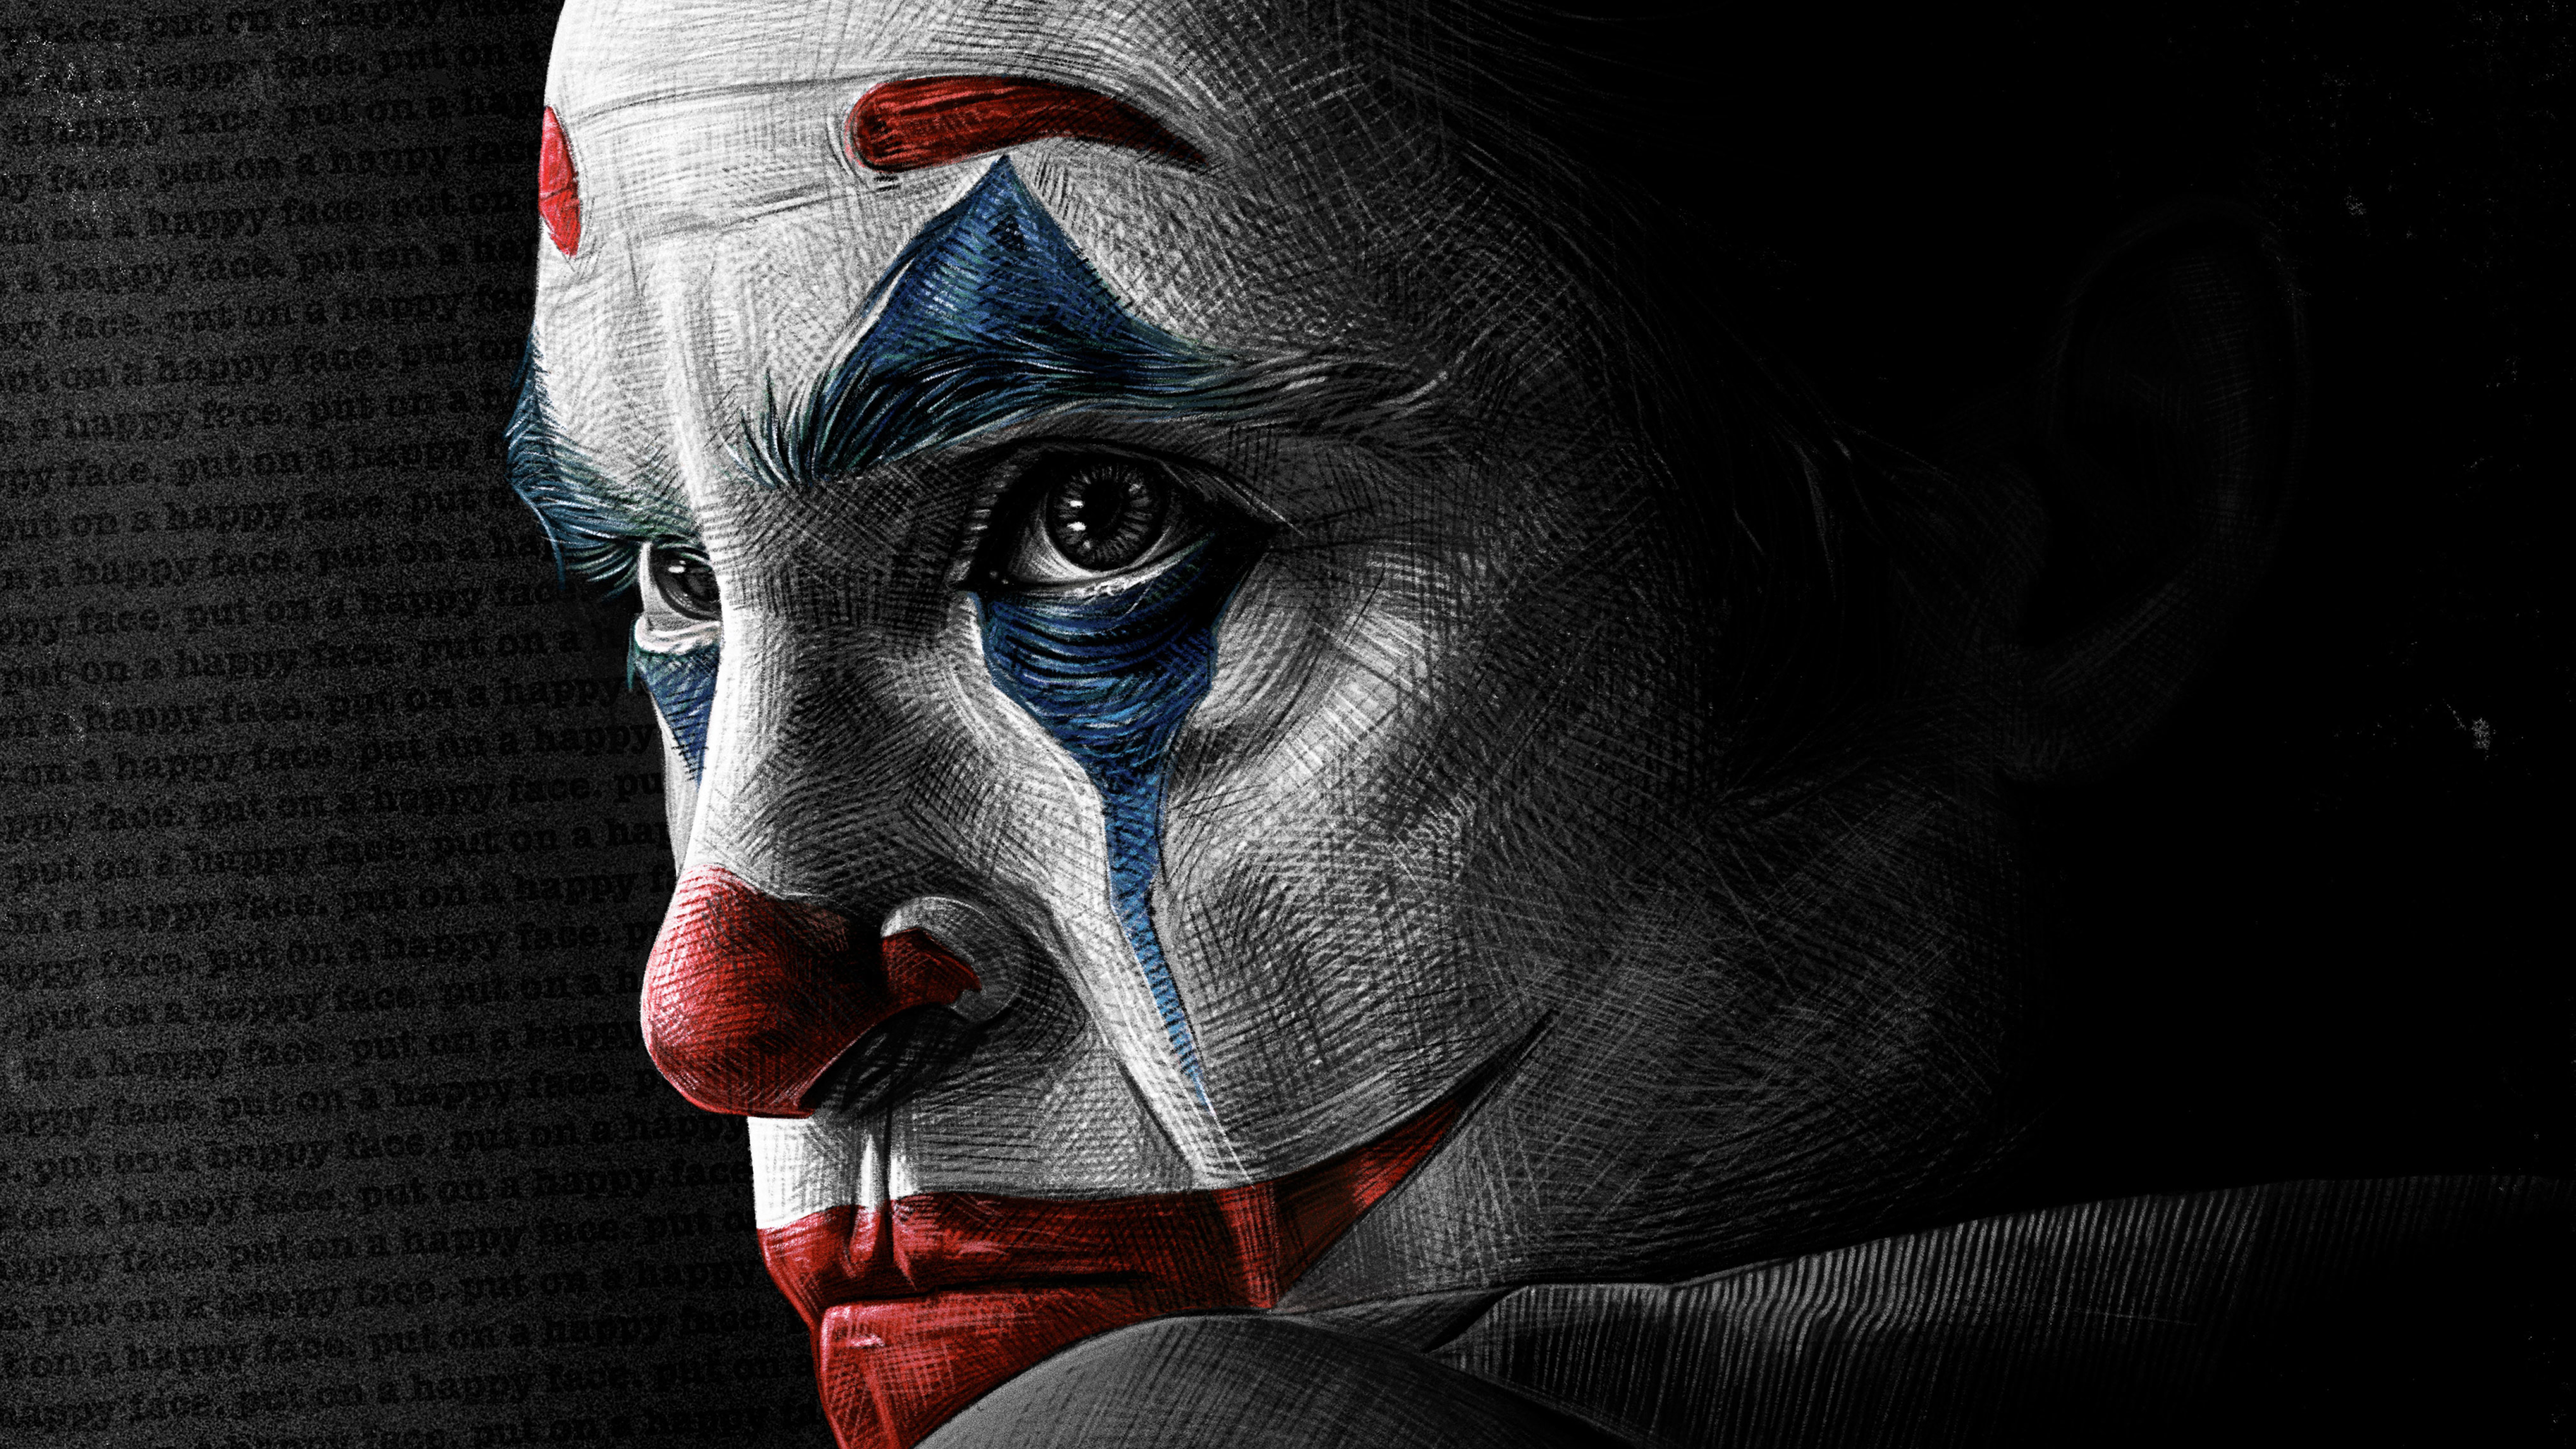 5120x2880 4k Joaquin Phoenix As Joker 5K Wallpaper, HD Artist 4K Wallpapers,  Images, Photos and Background - Wallpapers Den